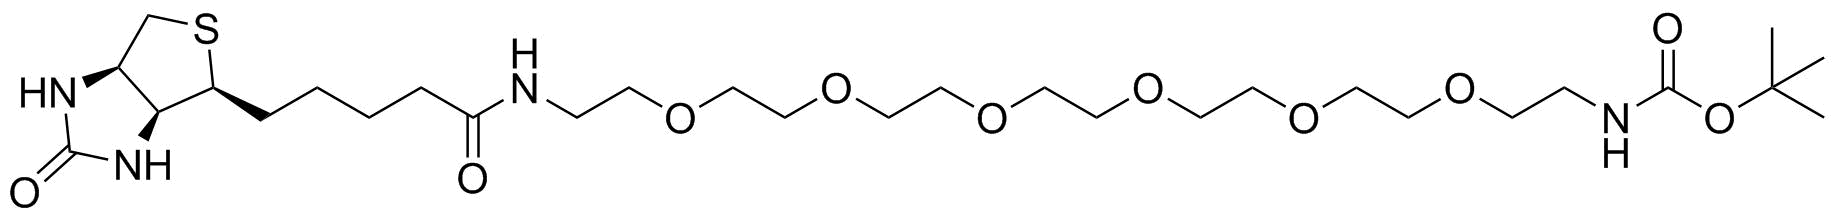 Biotin-PEG6-NH-Boc